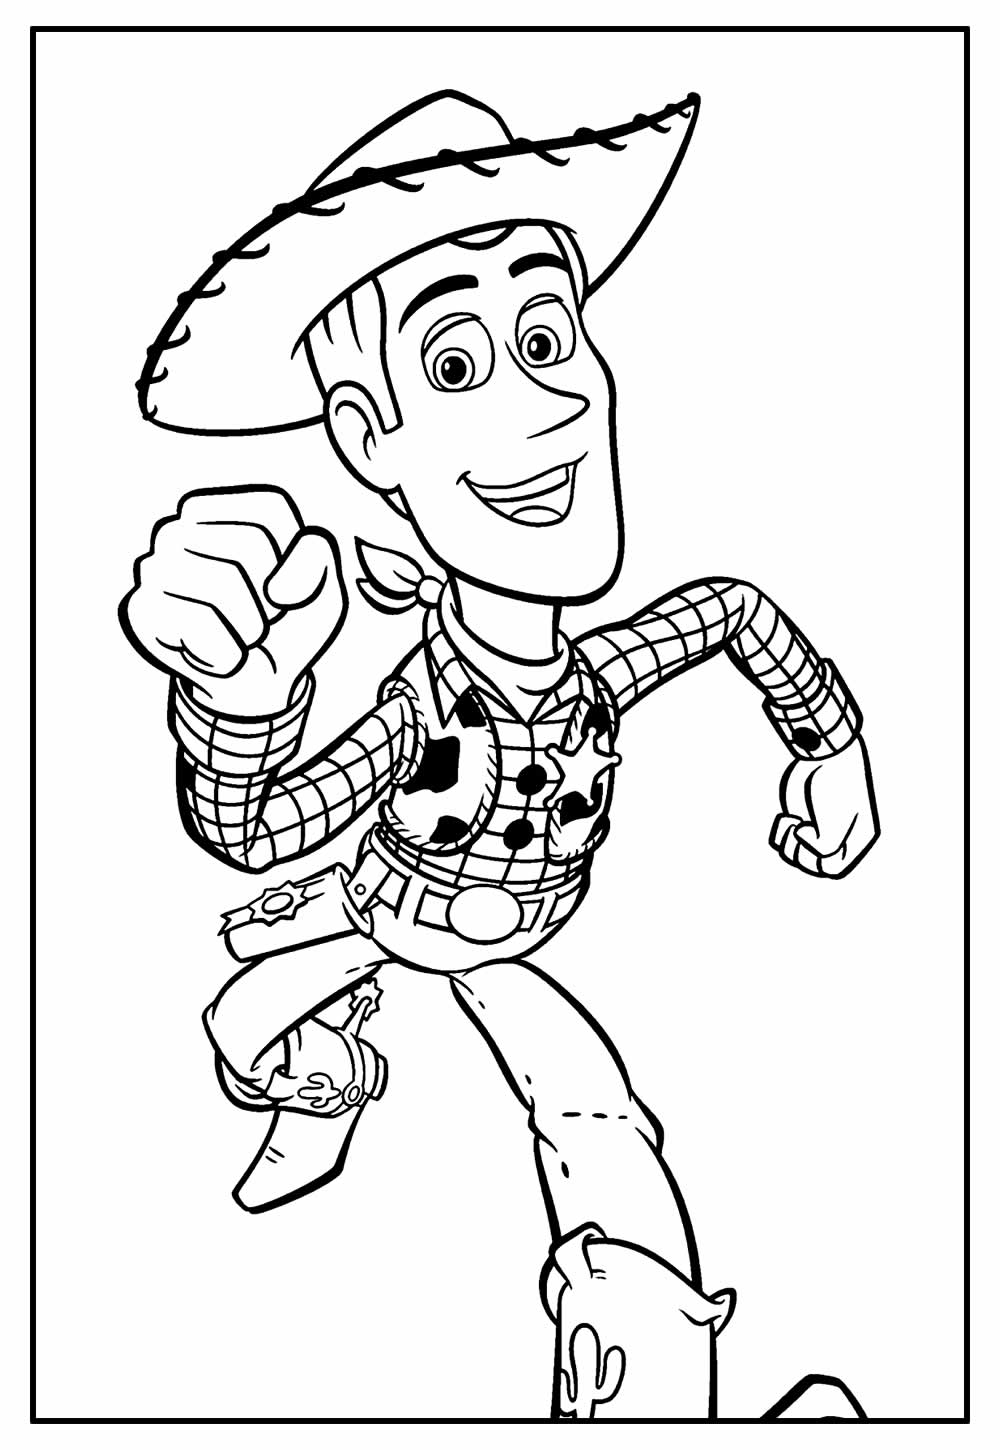 Desenho do Xerife Woody para colorir